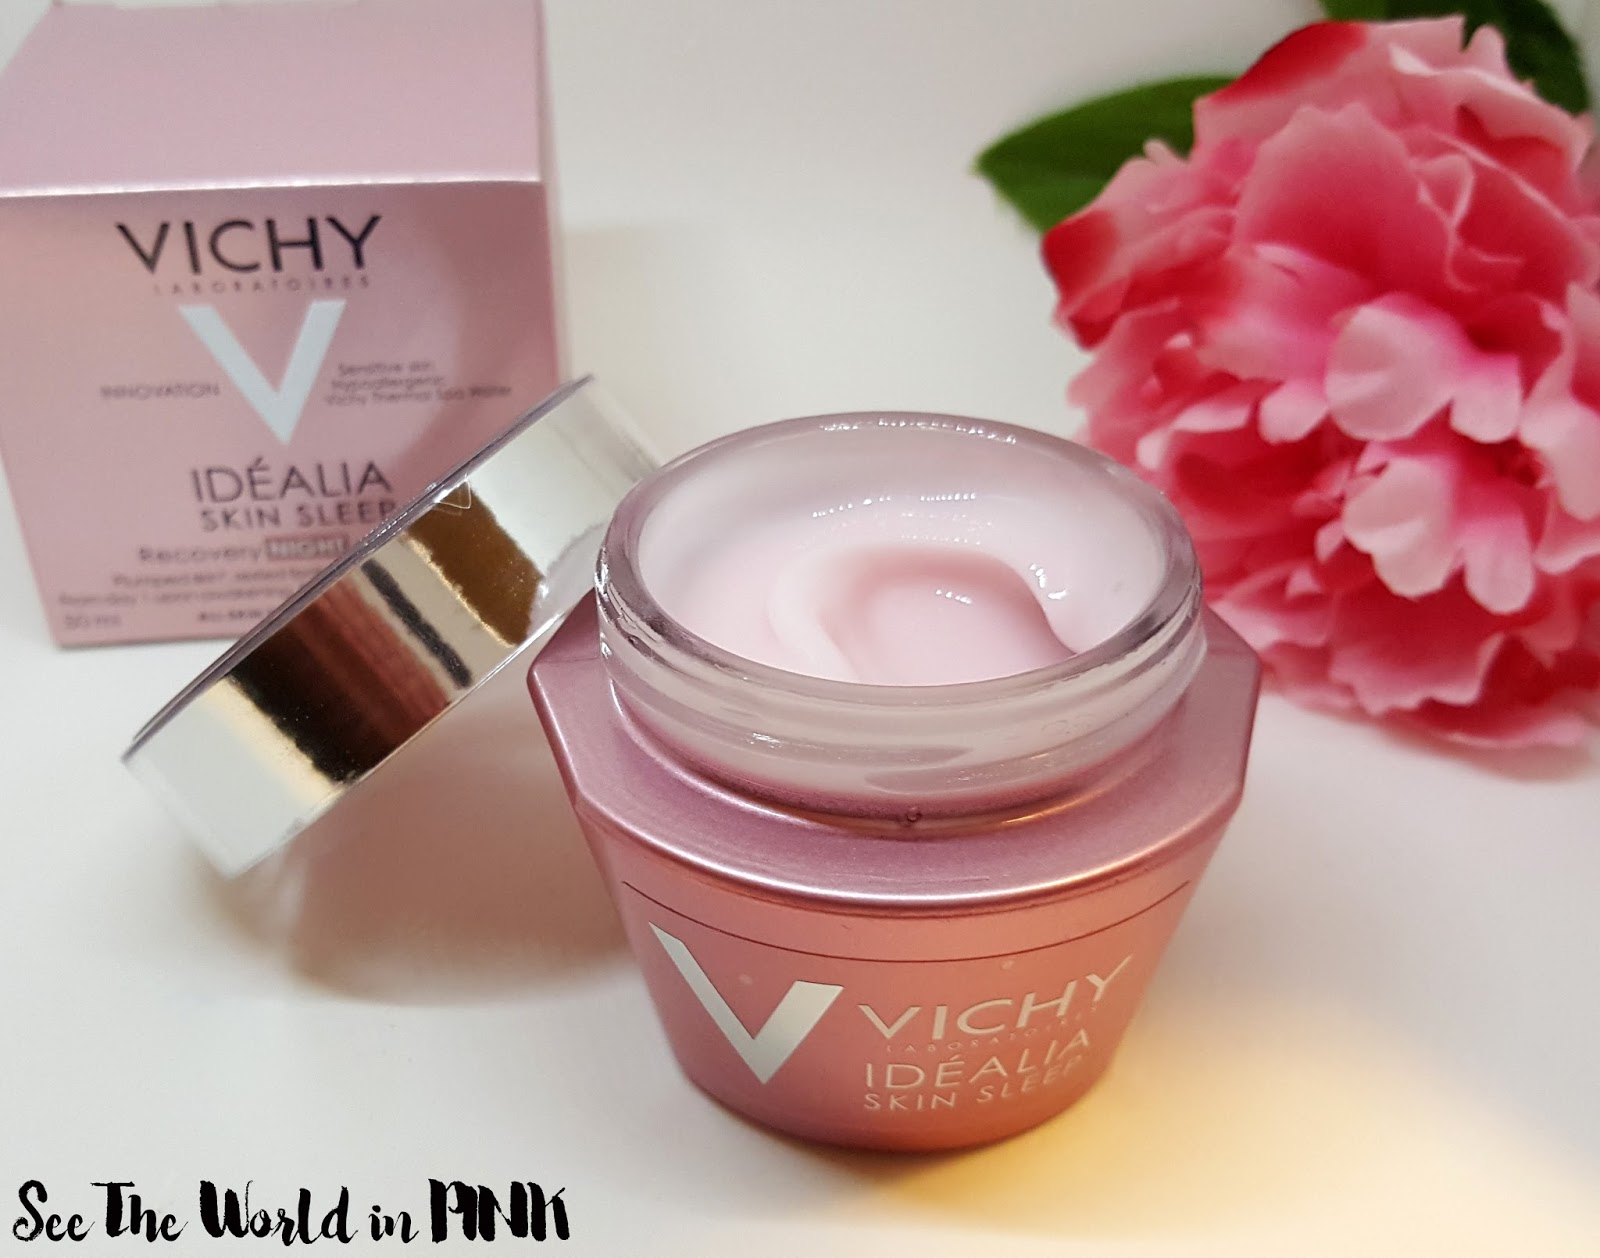 Vichy Idealia Skin Sleep 